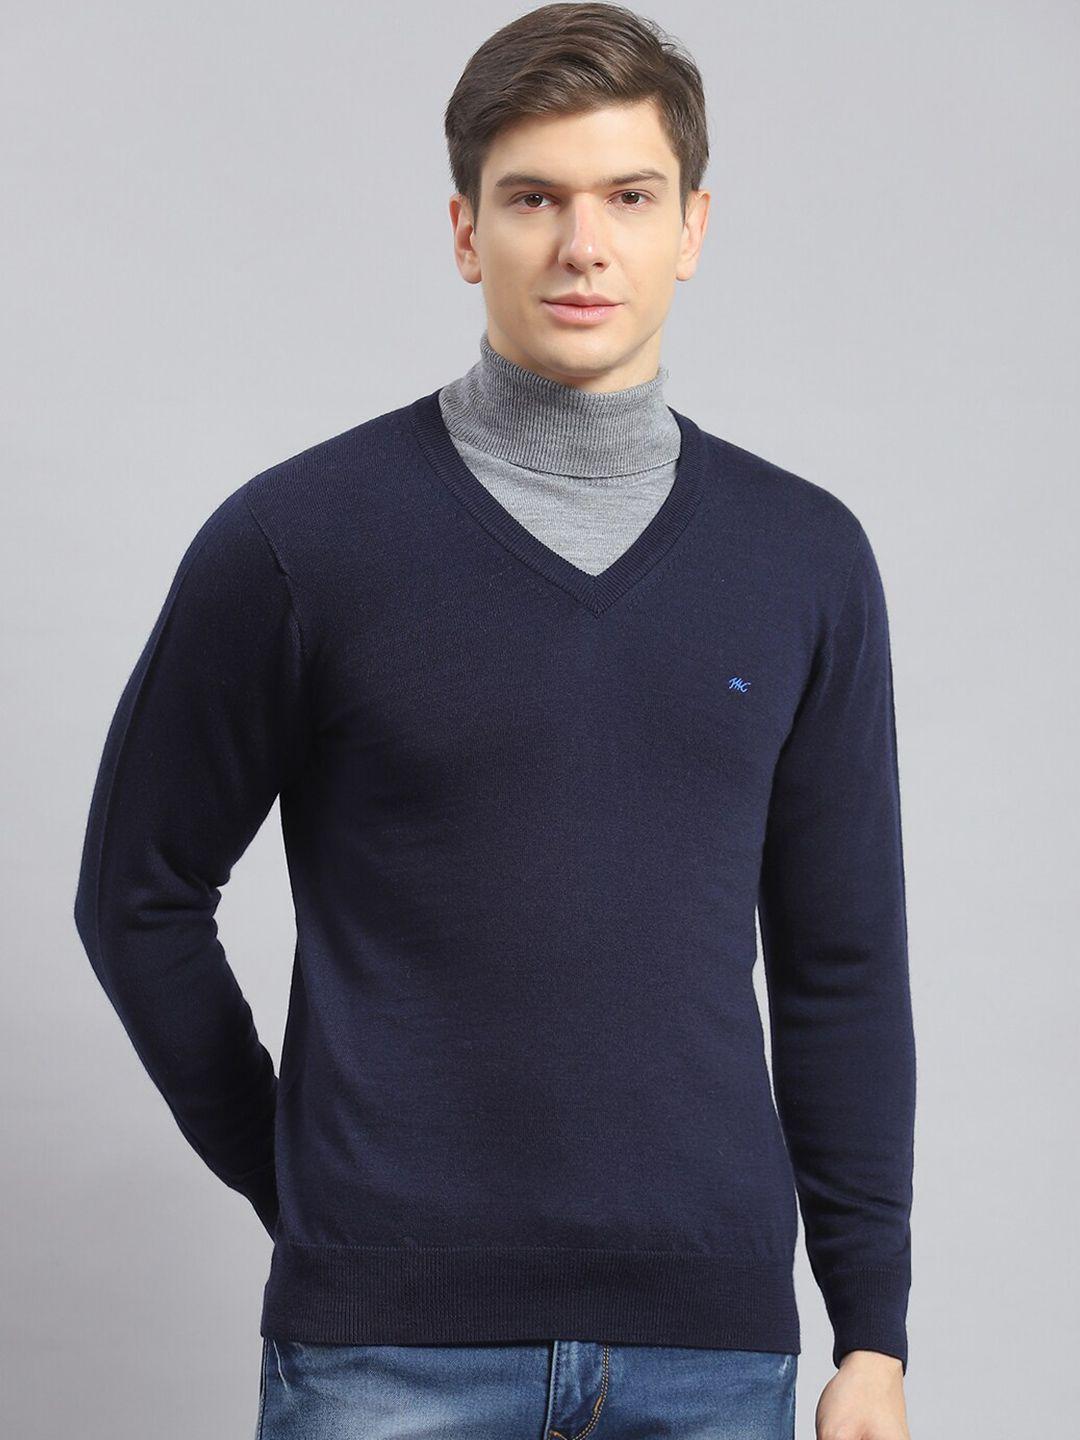 monte carlo v-neck woollen pullover sweater